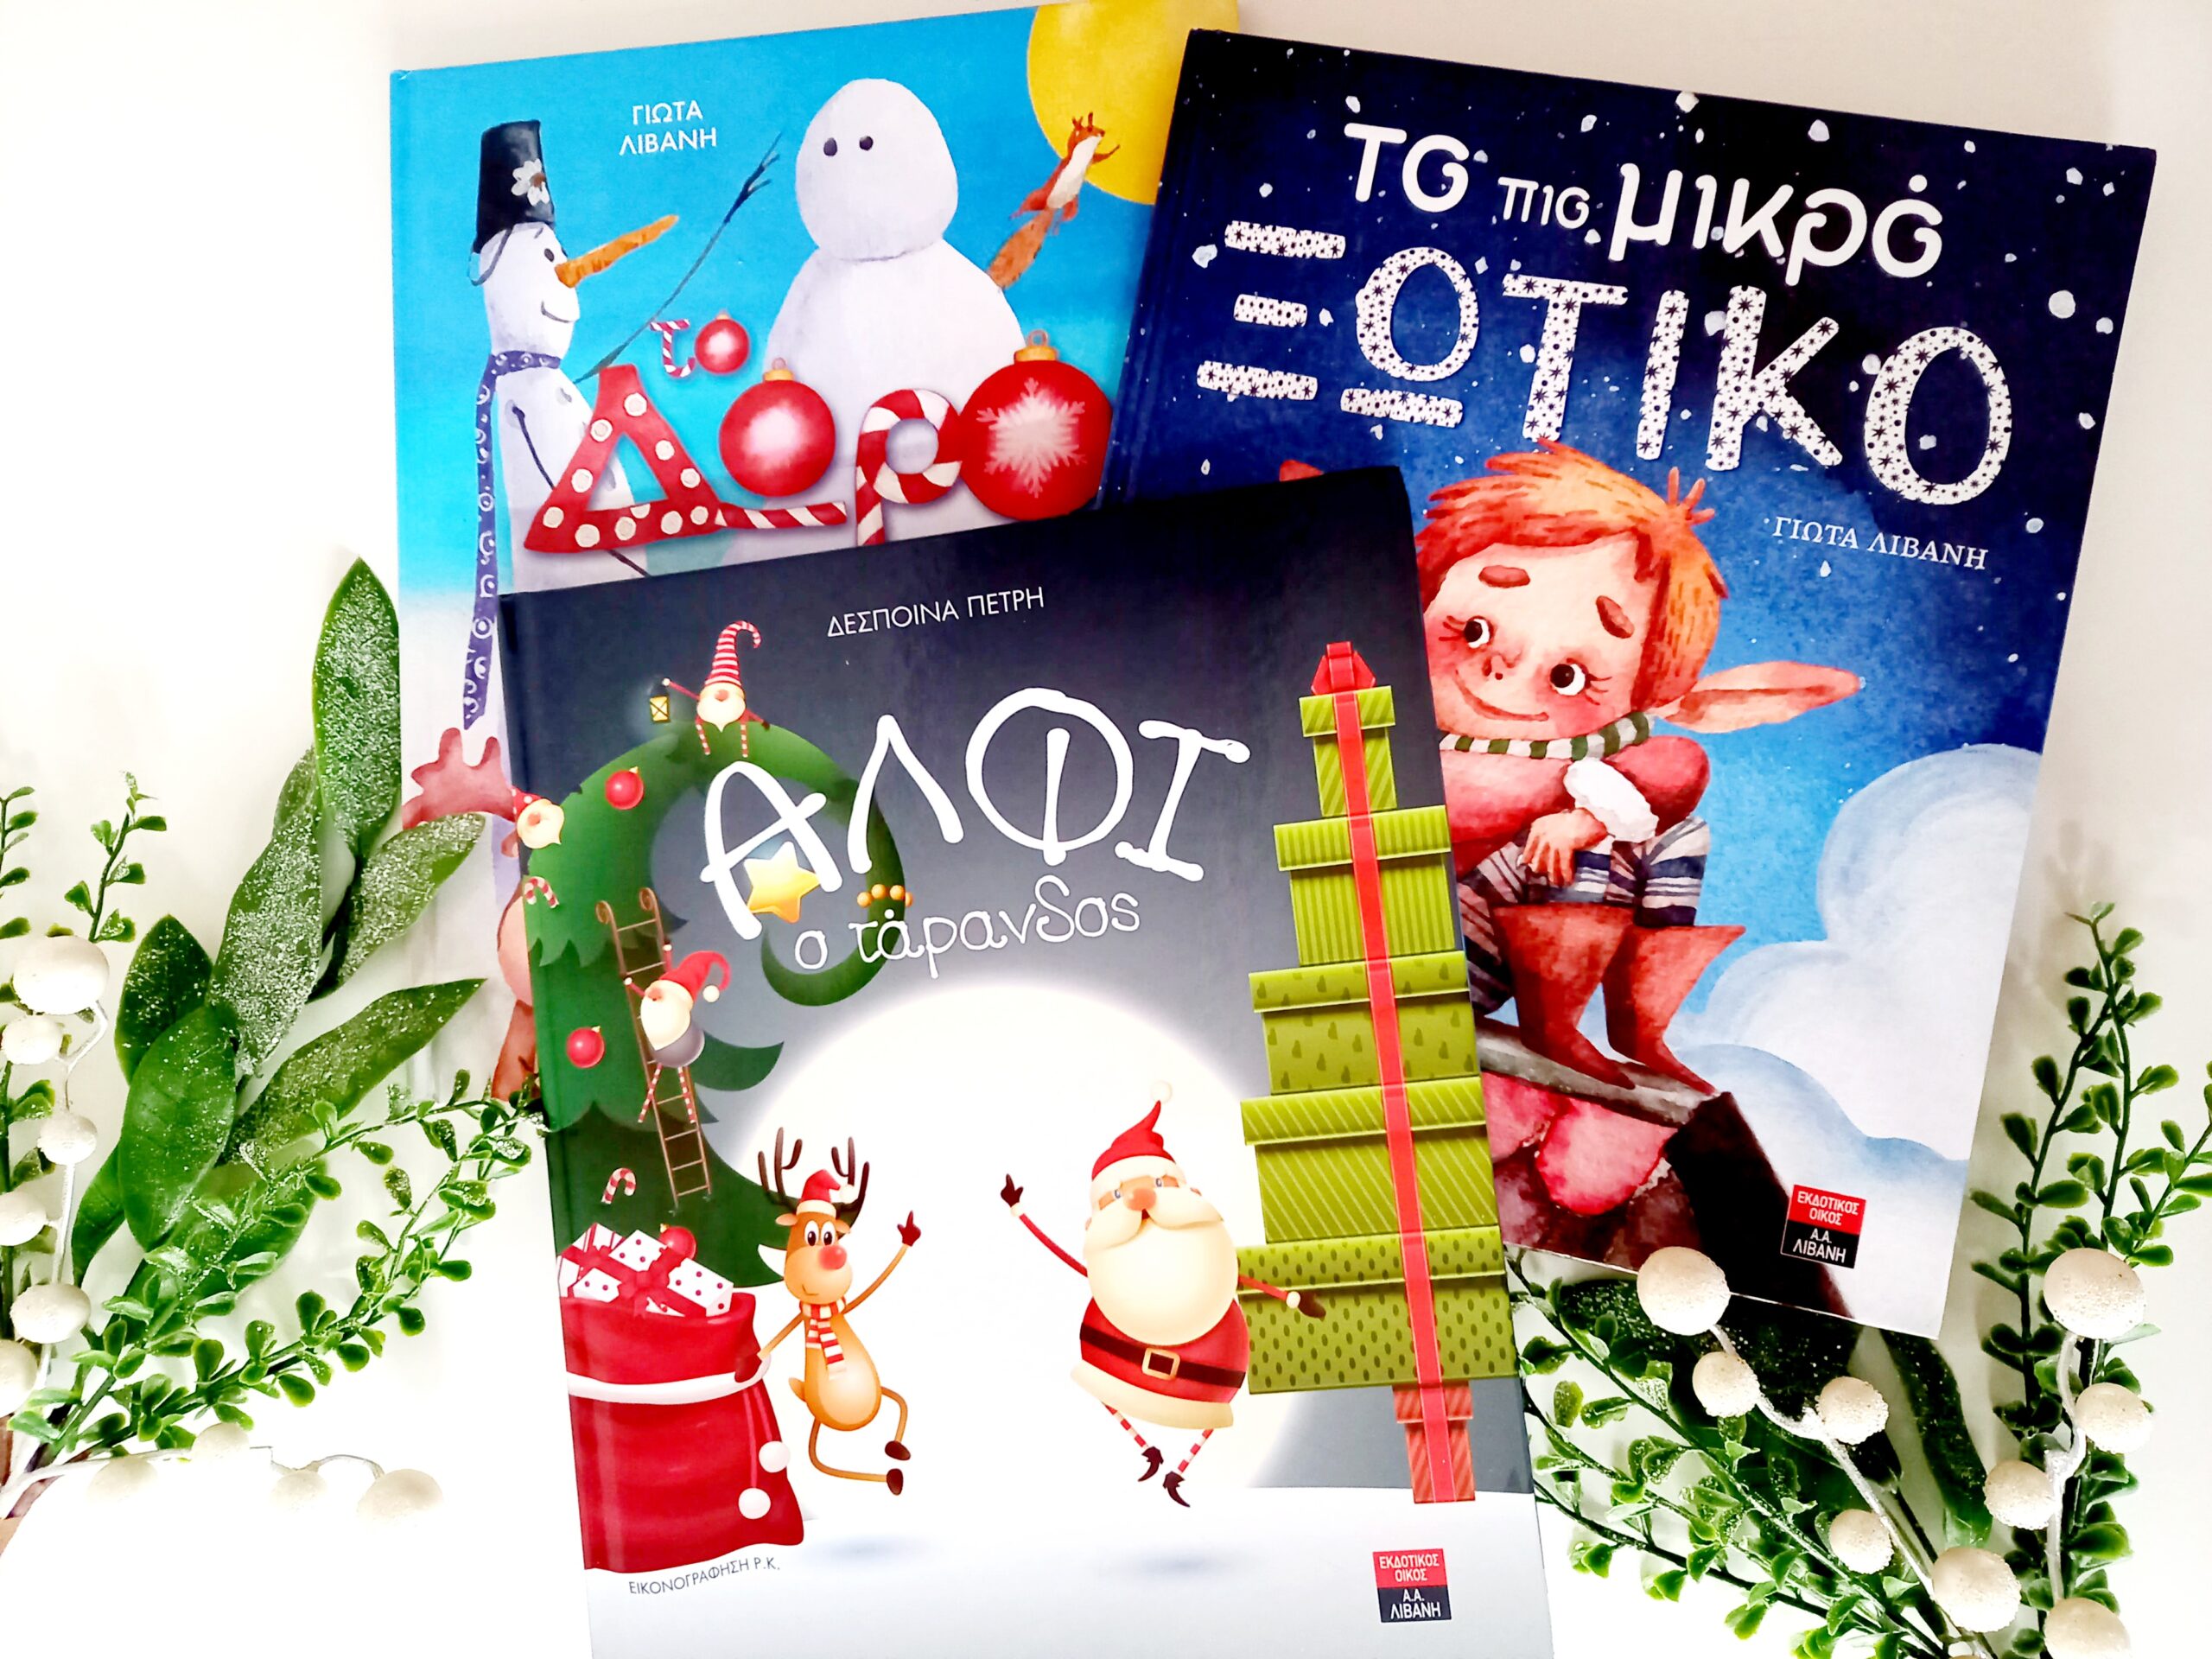 You are currently viewing Χριστουγεννιάτικα βιβλία για παιδιά ηλικίας 3 – 6 ετών, εκδόσεις Λιβάνη. (μέρος ά)